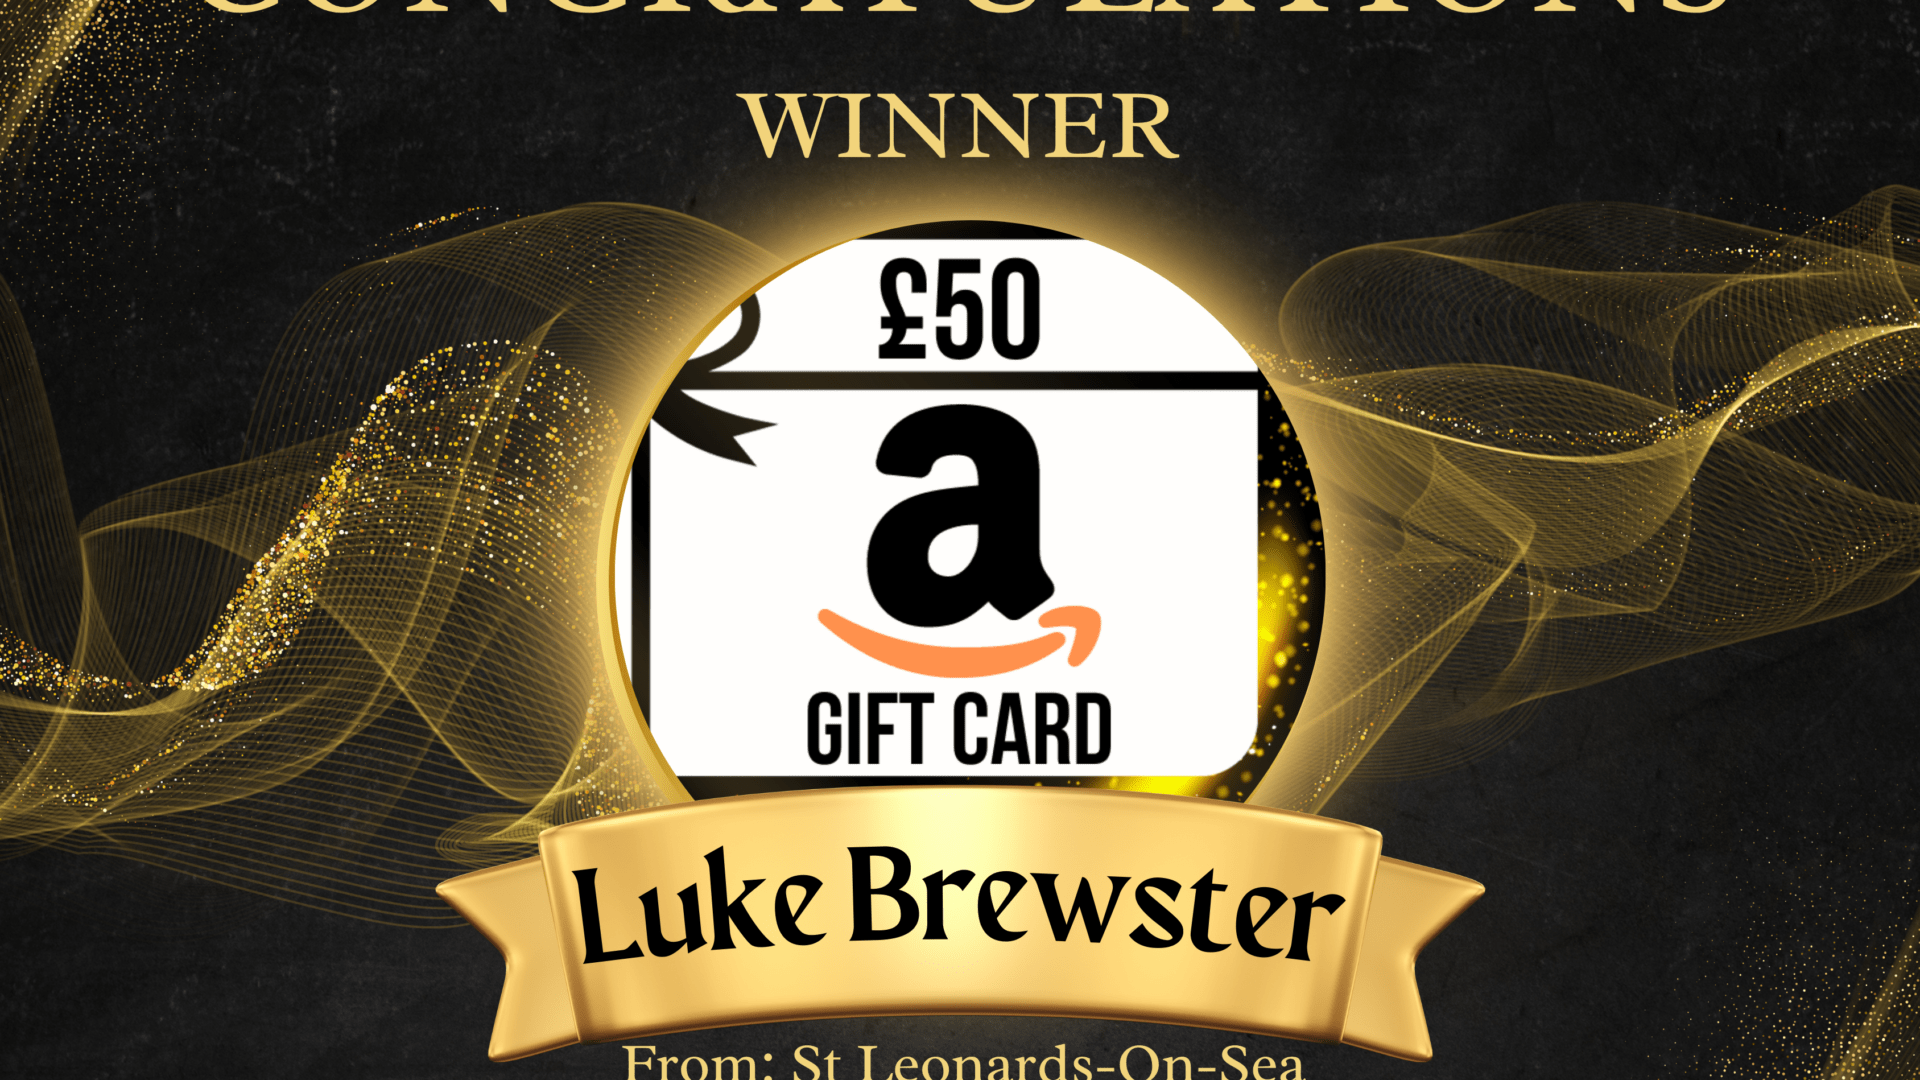 Congratulations to Luke Brewster from St Leonards, winner of a £50 Amazon voucher!